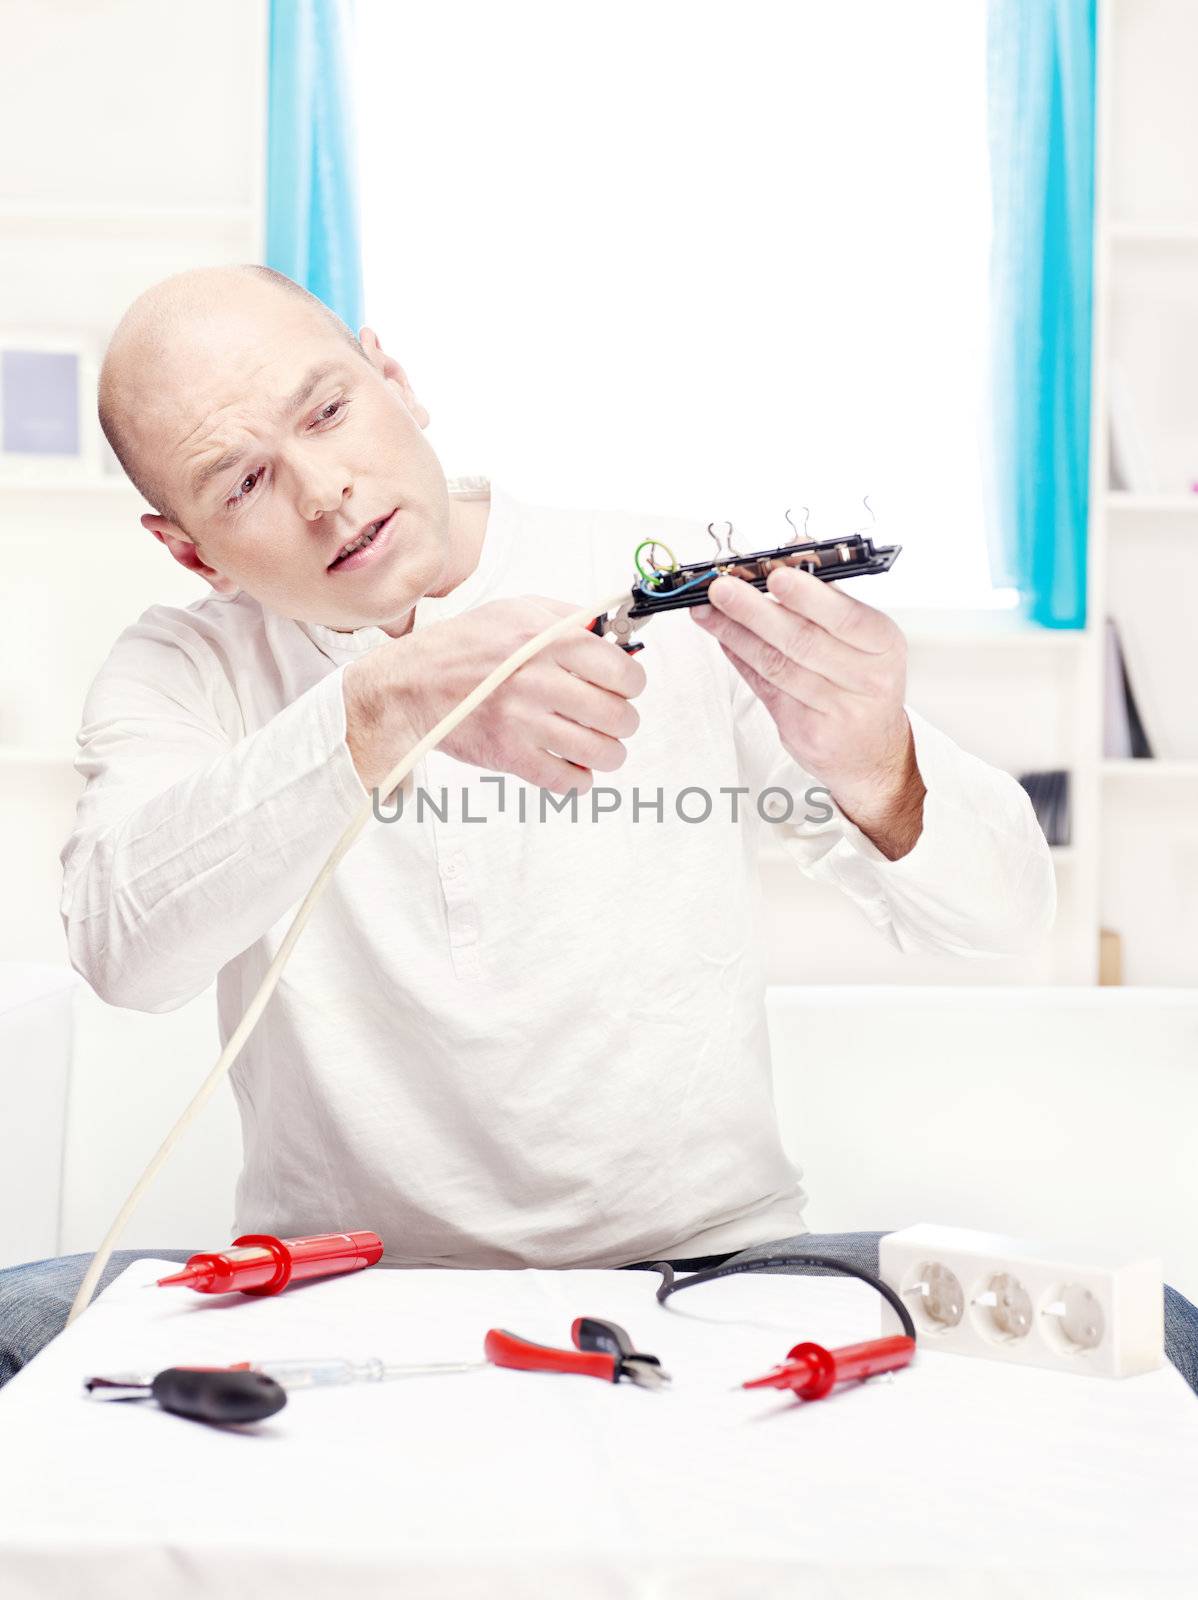 man repair an extension cord at home